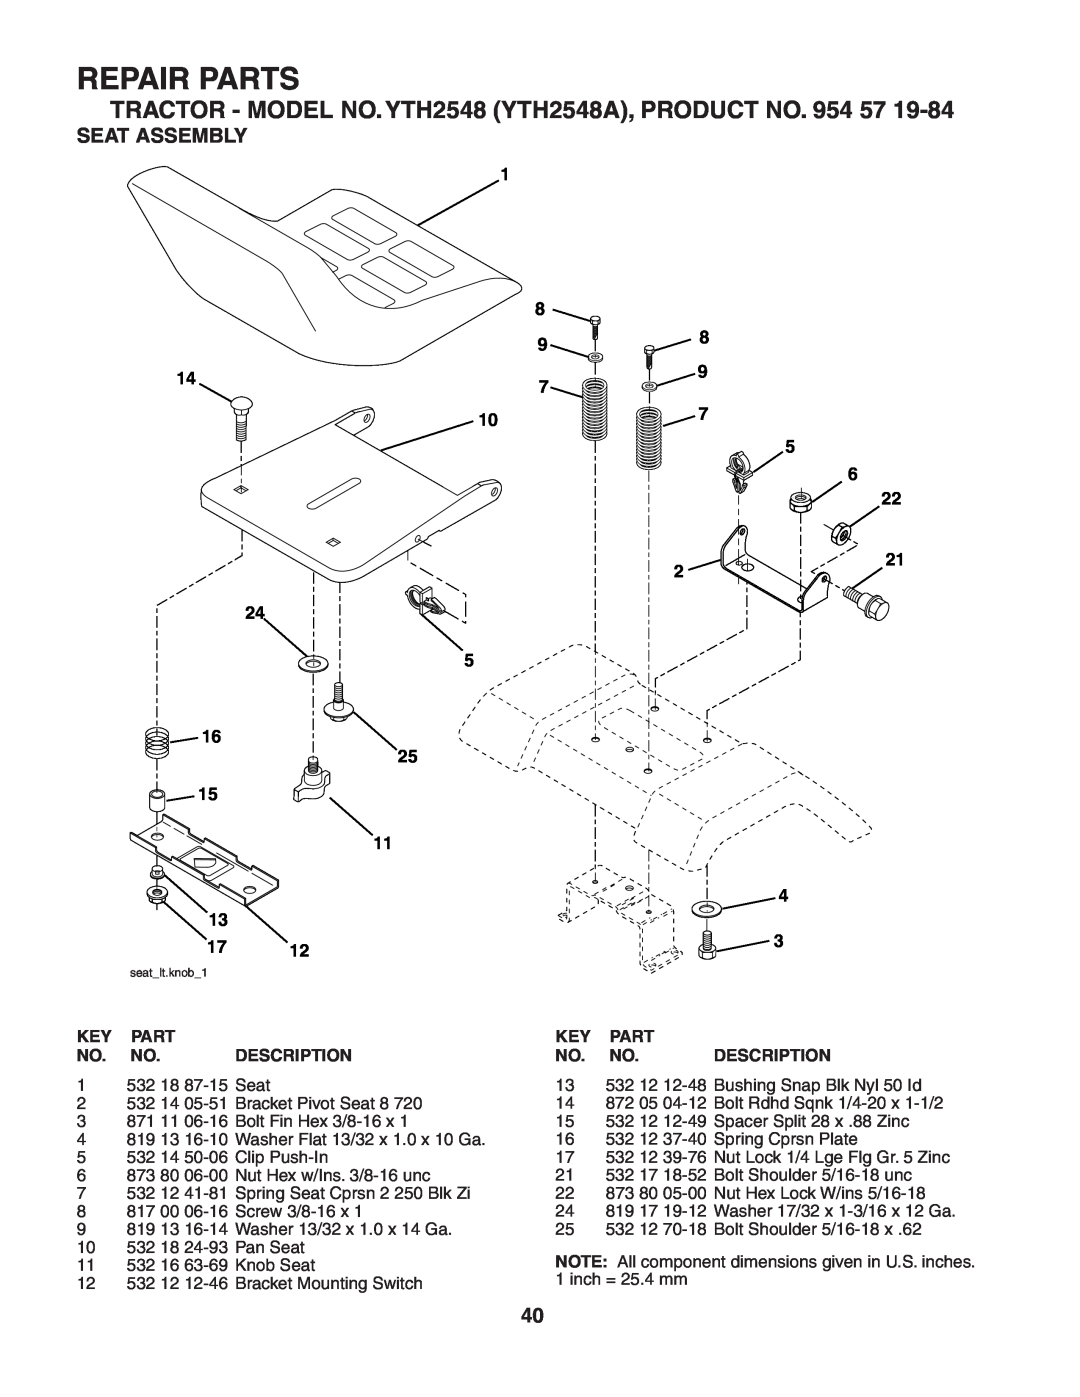 Husqvarna Seat Assembly, Repair Parts, TRACTOR - MODEL NO. YTH2548 YTH2548A, PRODUCT NO. 954 57, seatlt.knob1 